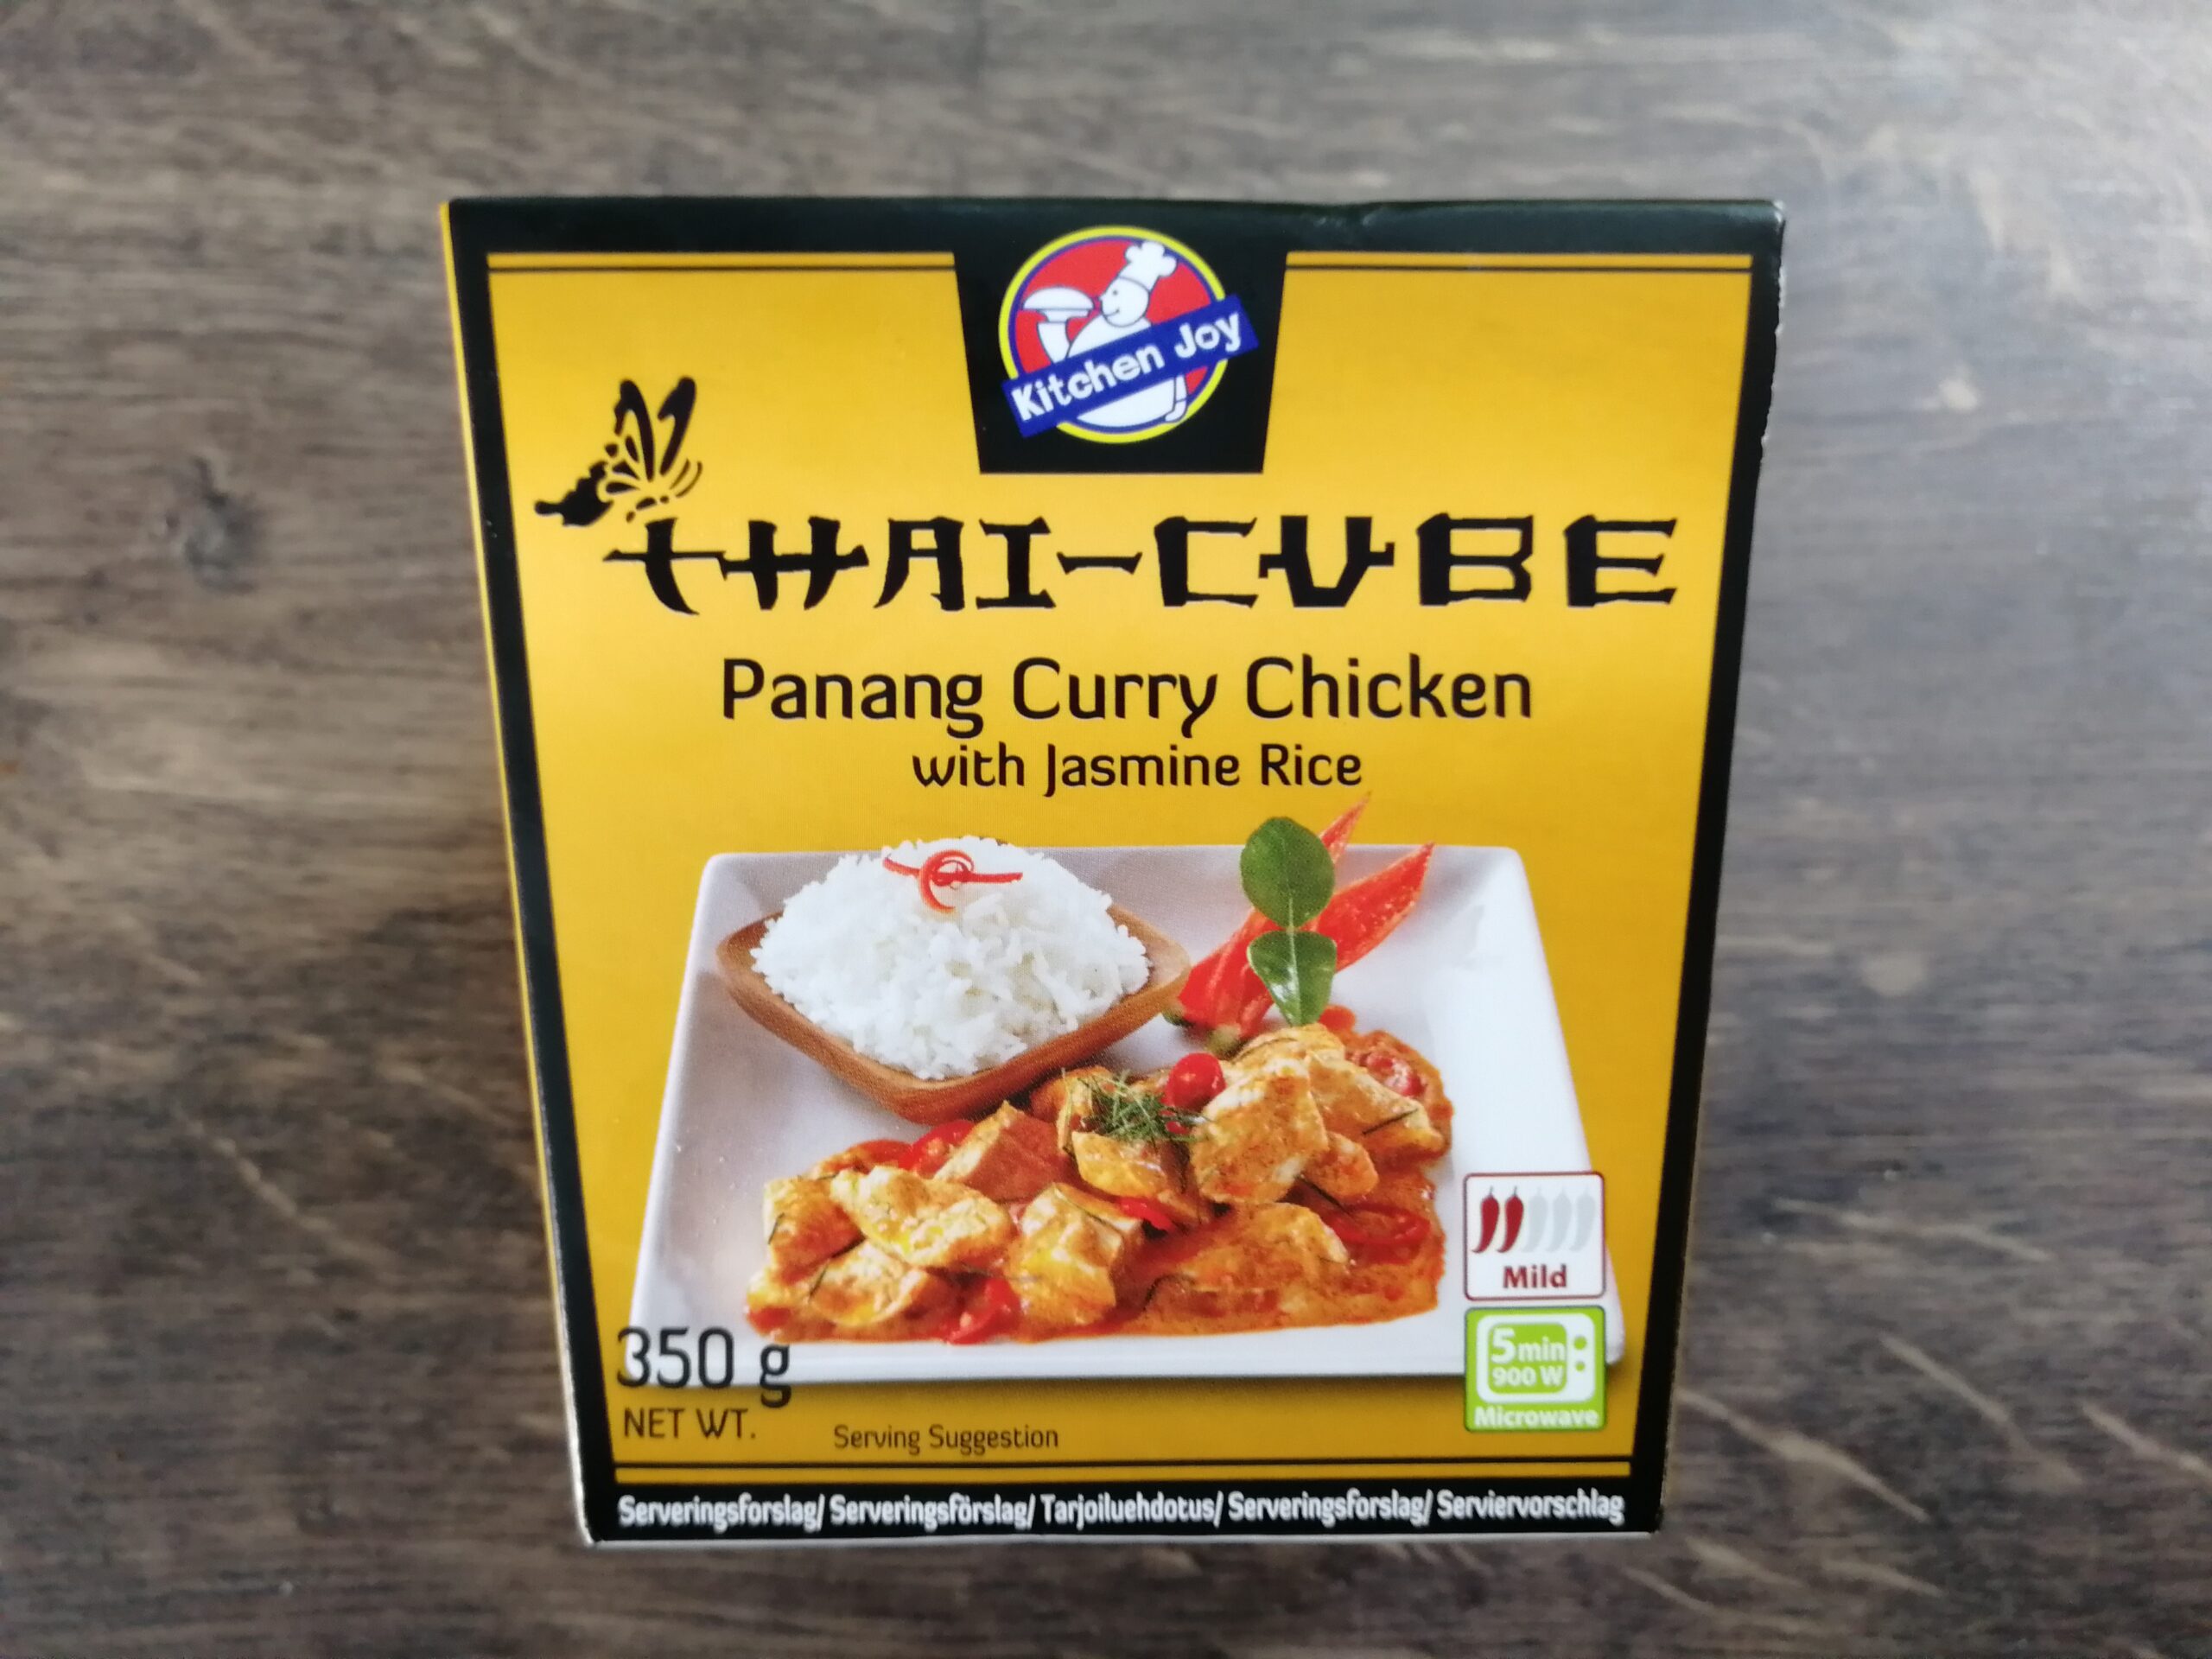 Thai-Cube Panang Curry Chicken fra Kitchen Joy